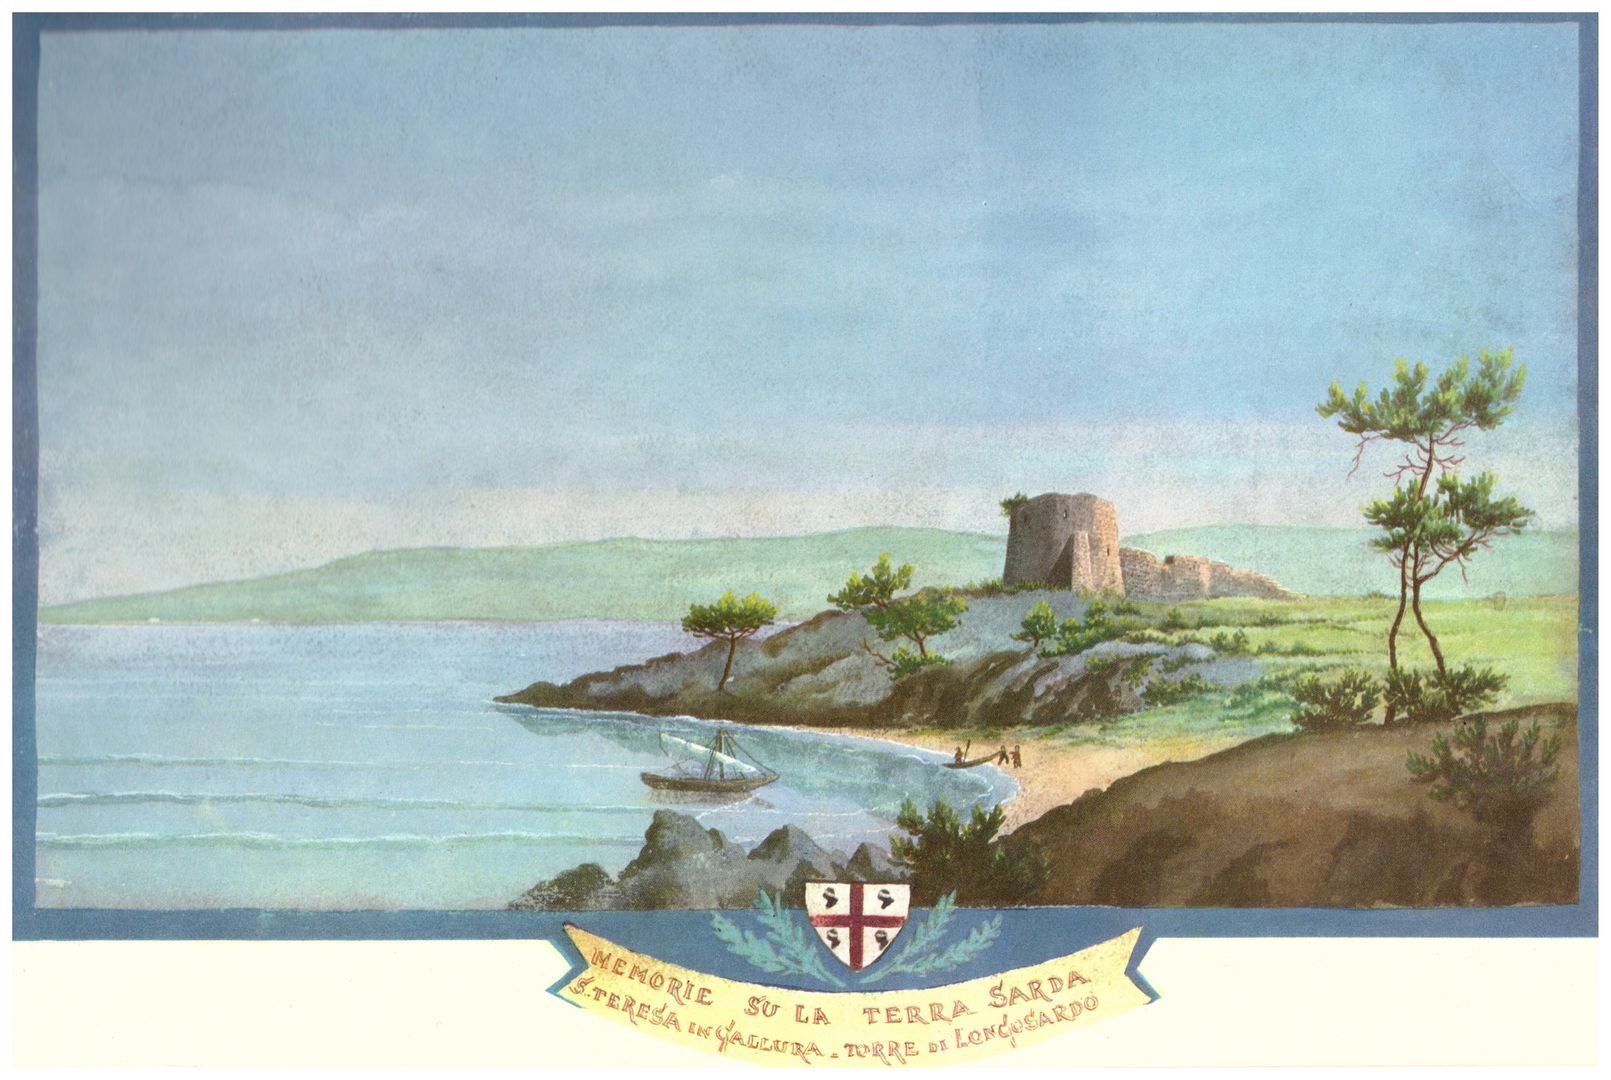 Philippine de La Marmora - Santa Teresa di Gallura-Torre di Longosardo, 1854-1856